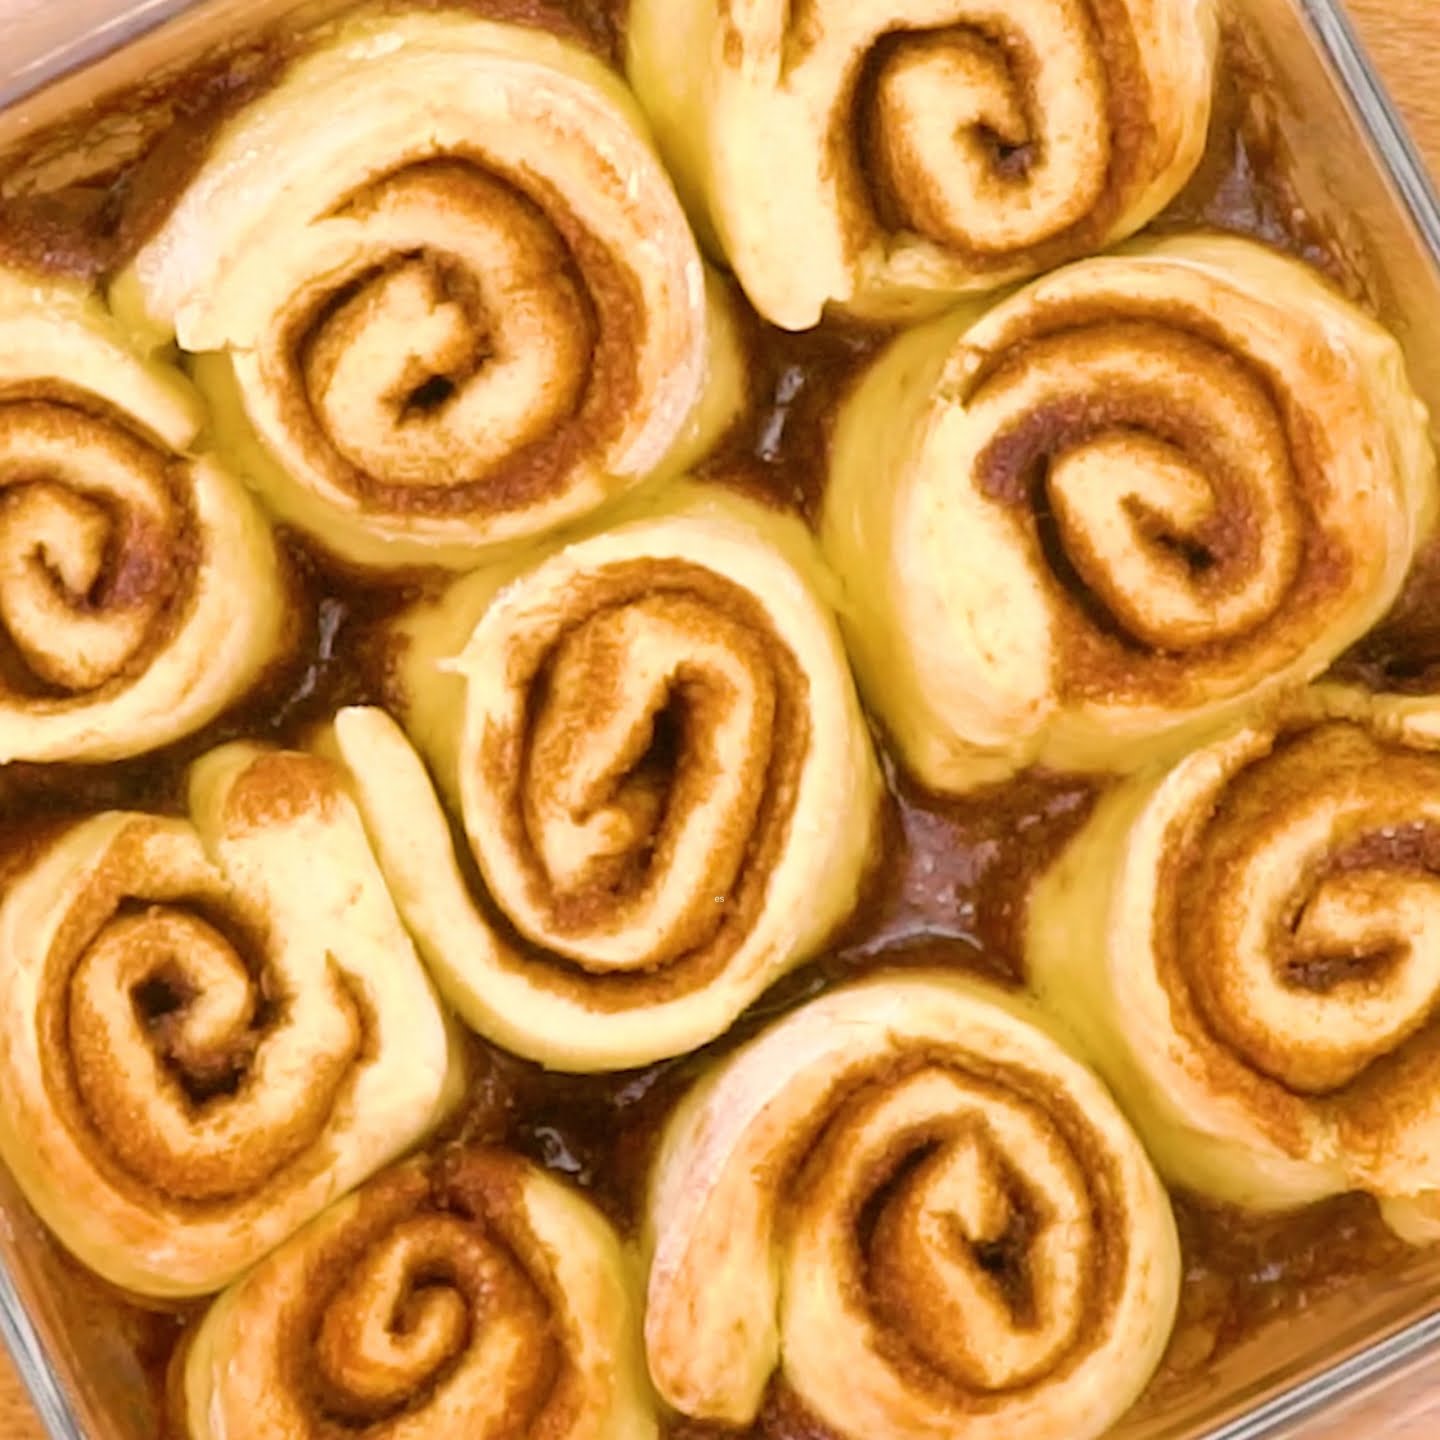 baking cinnamon rolls until golden brown